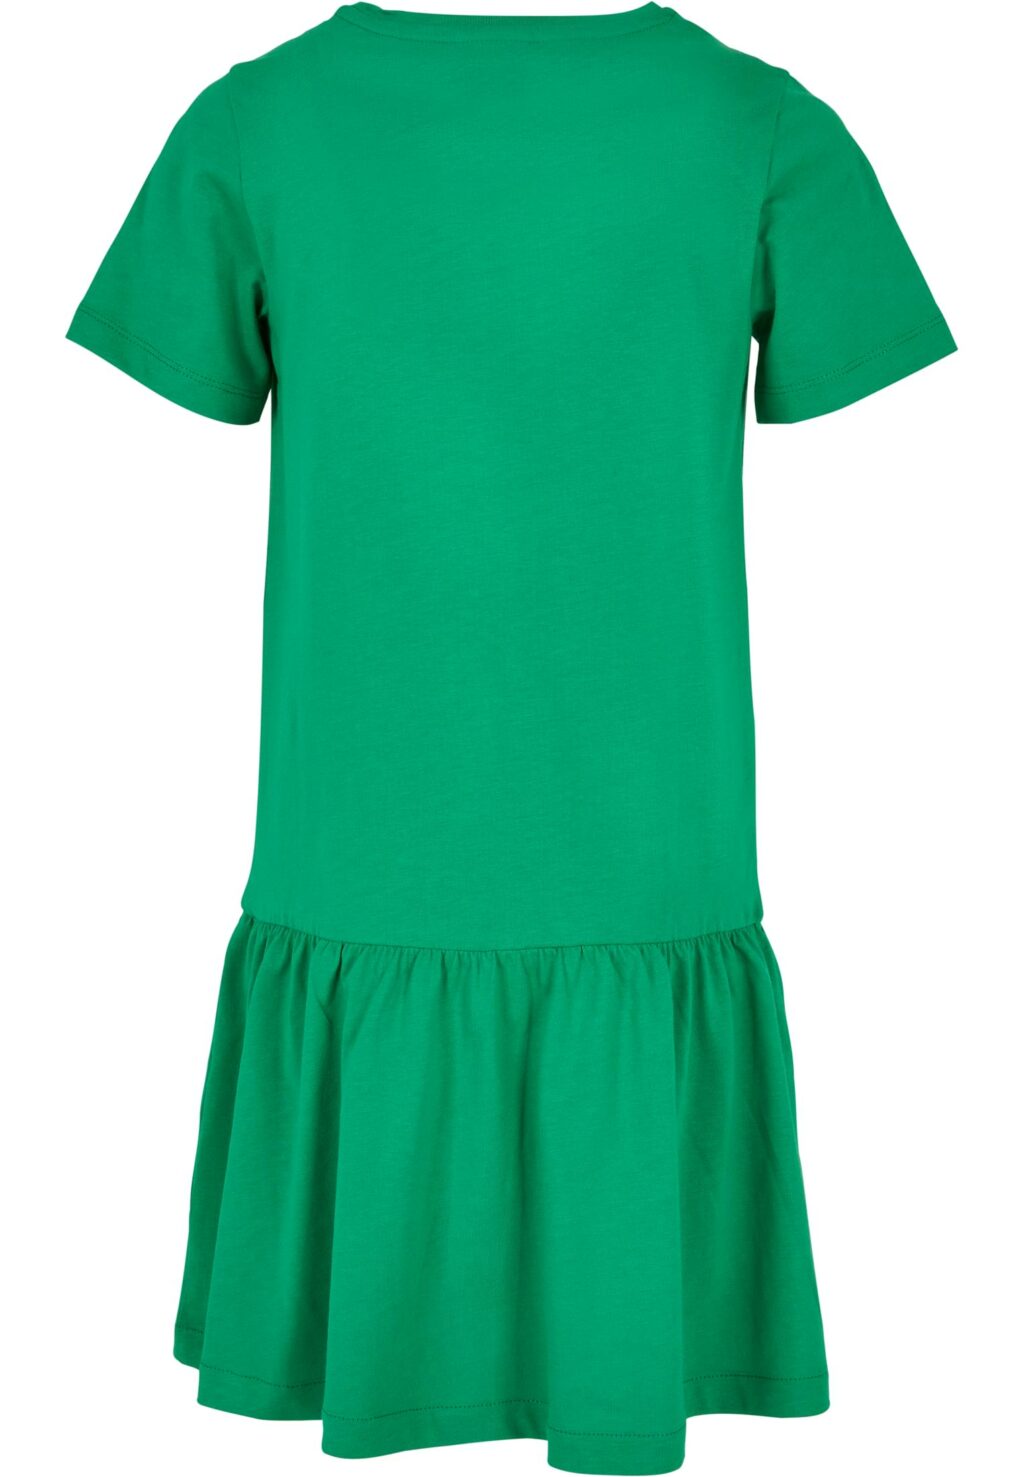 Girls Valance Tee Dress bodegagreen UCK4104